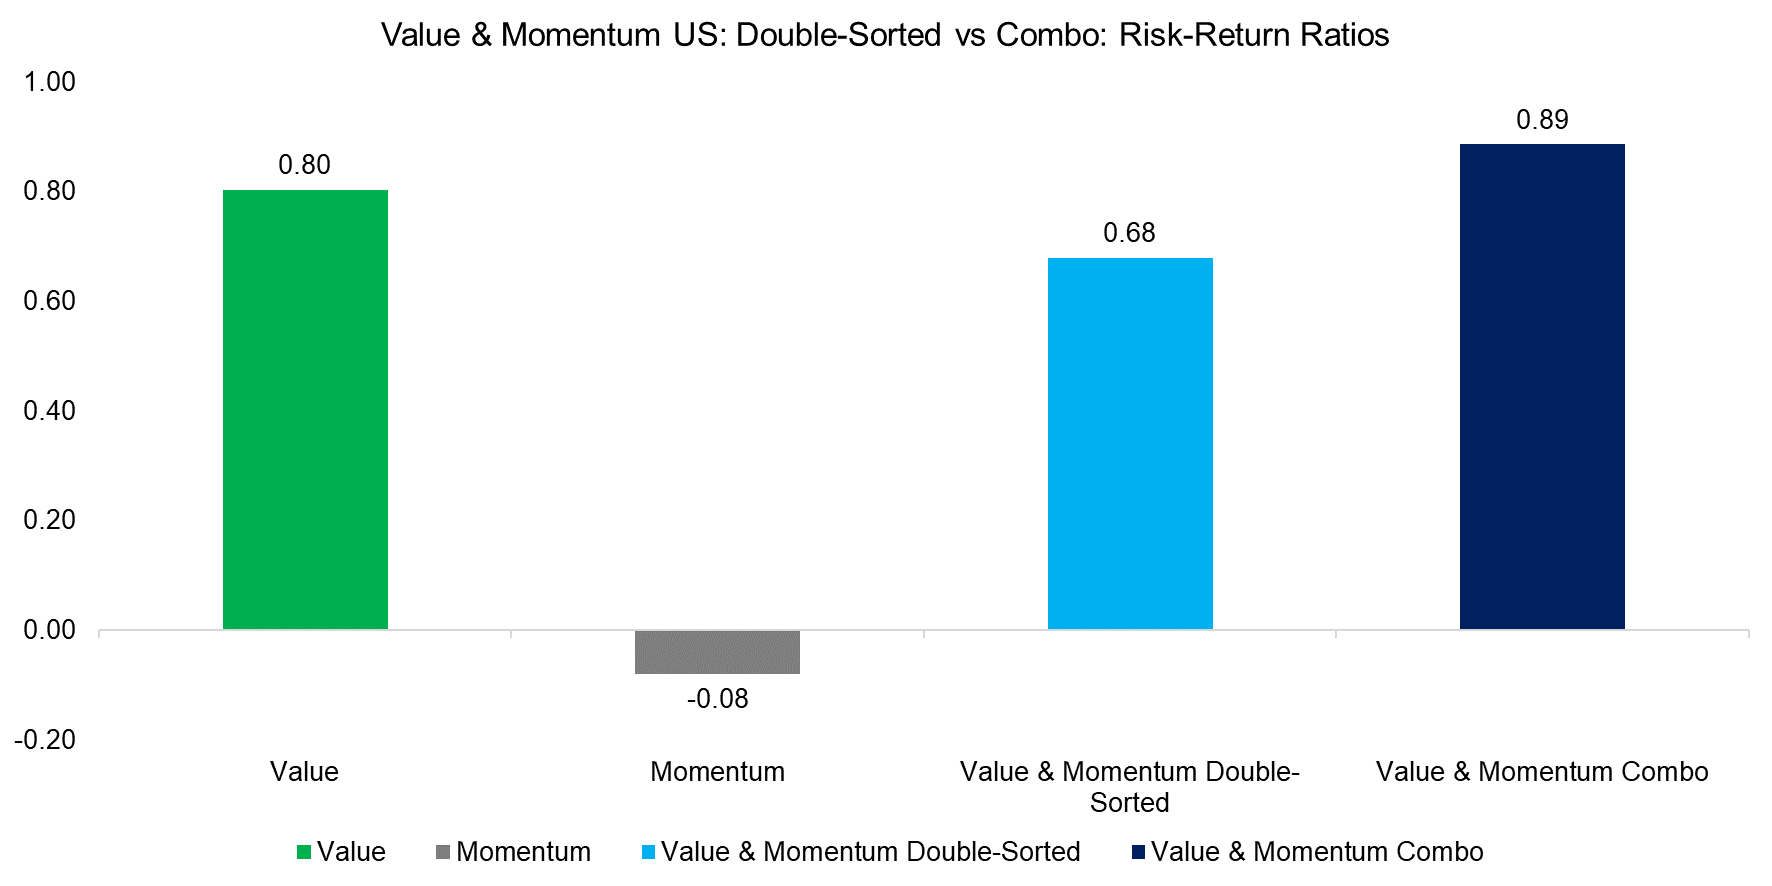 Value & Momentum US Double-Sorted vs Combo Risk-Return Ratios